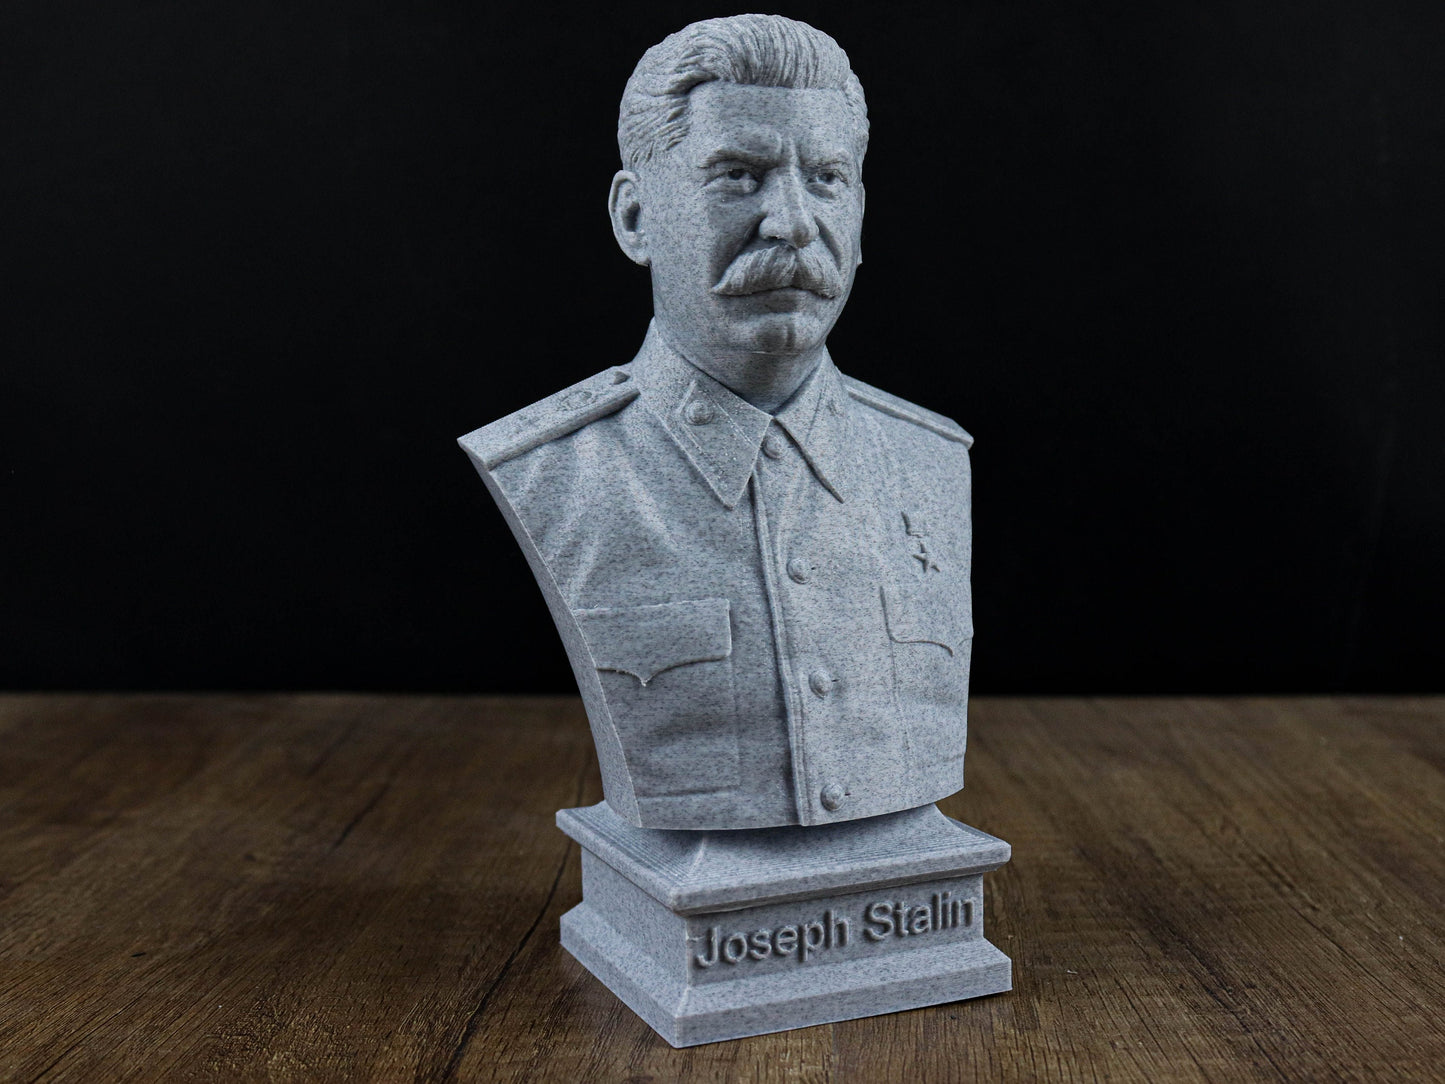 Vladimir Lenin and Joseph Stalin Busts, Russian Leadership Statues.